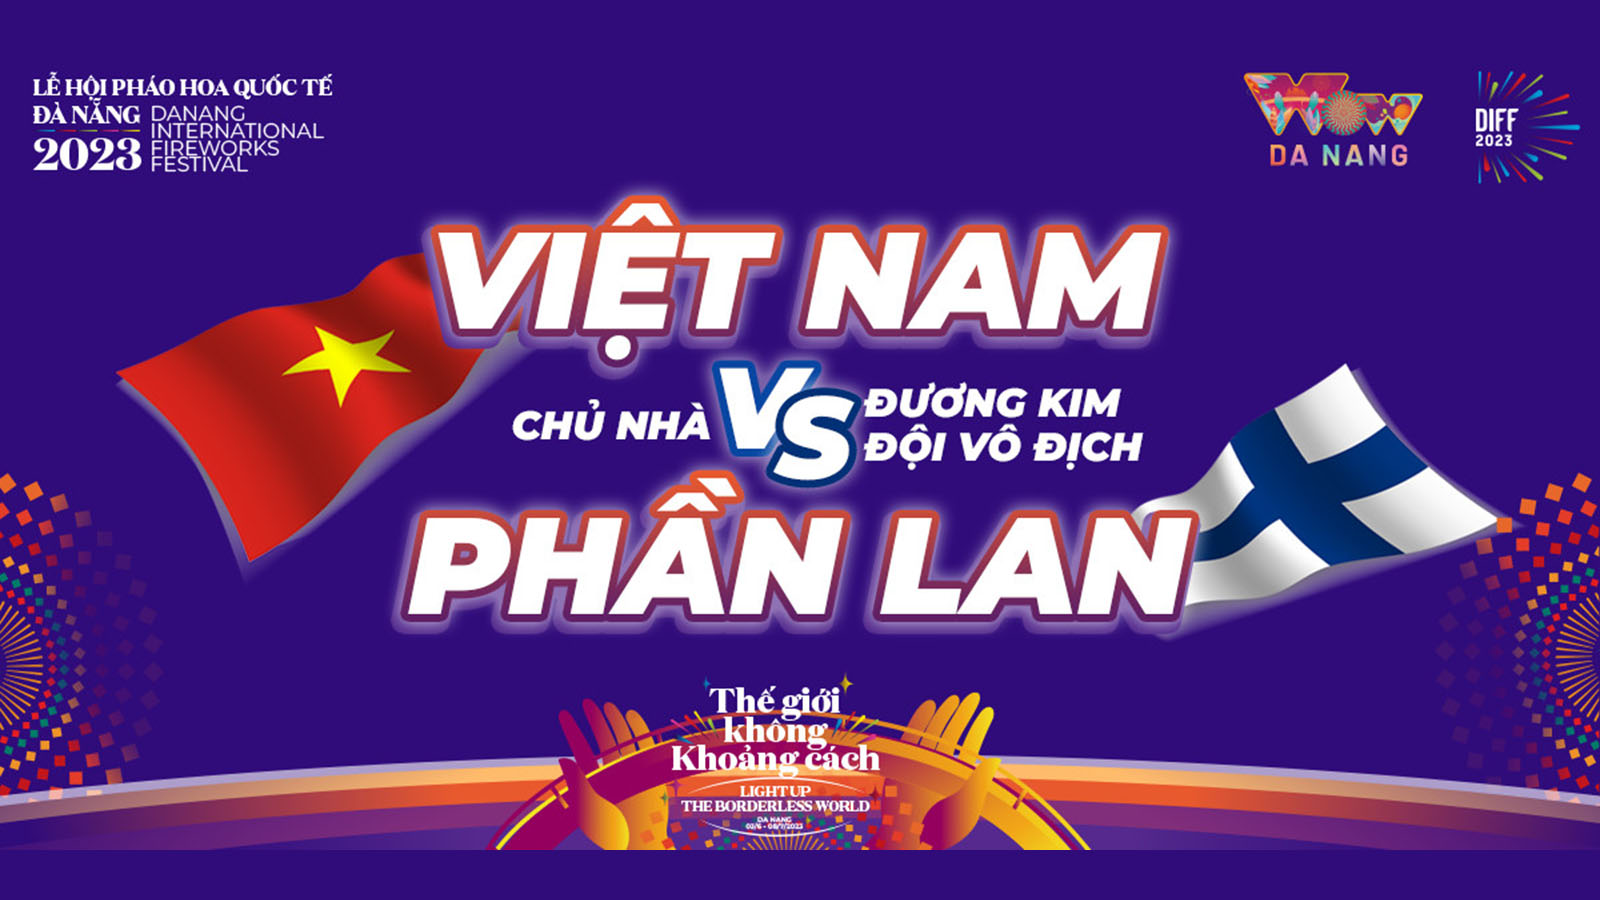 Khai Mac Diff 2023 Cuoc Cham Tran Giua Chu Nha Va Duong Kiem Vo Dich